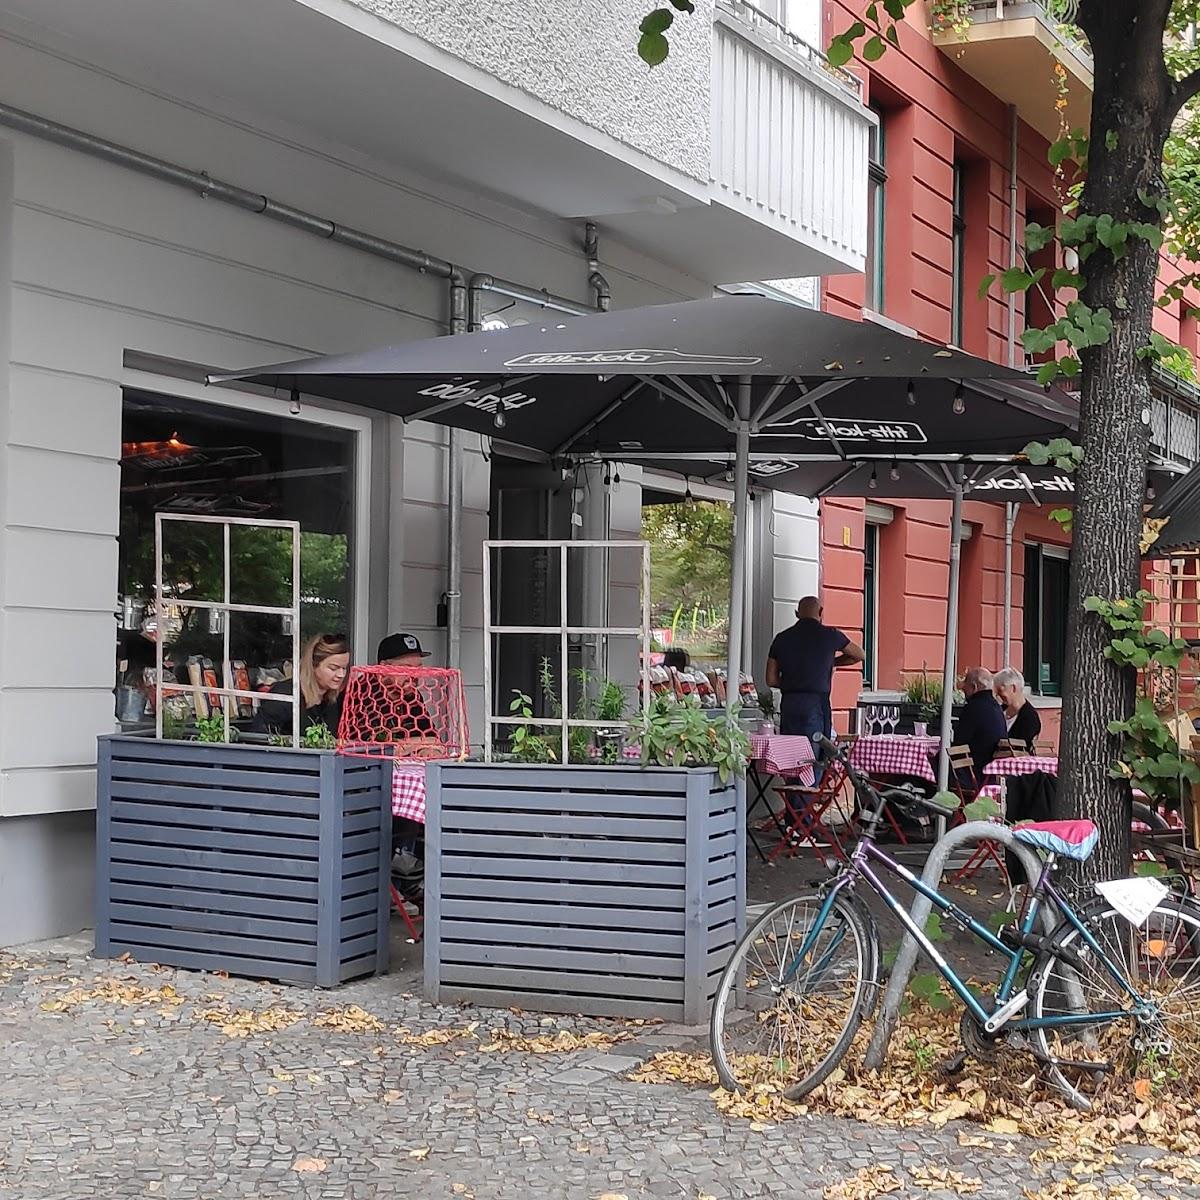 Restaurant "The Bufala Club" in Berlin